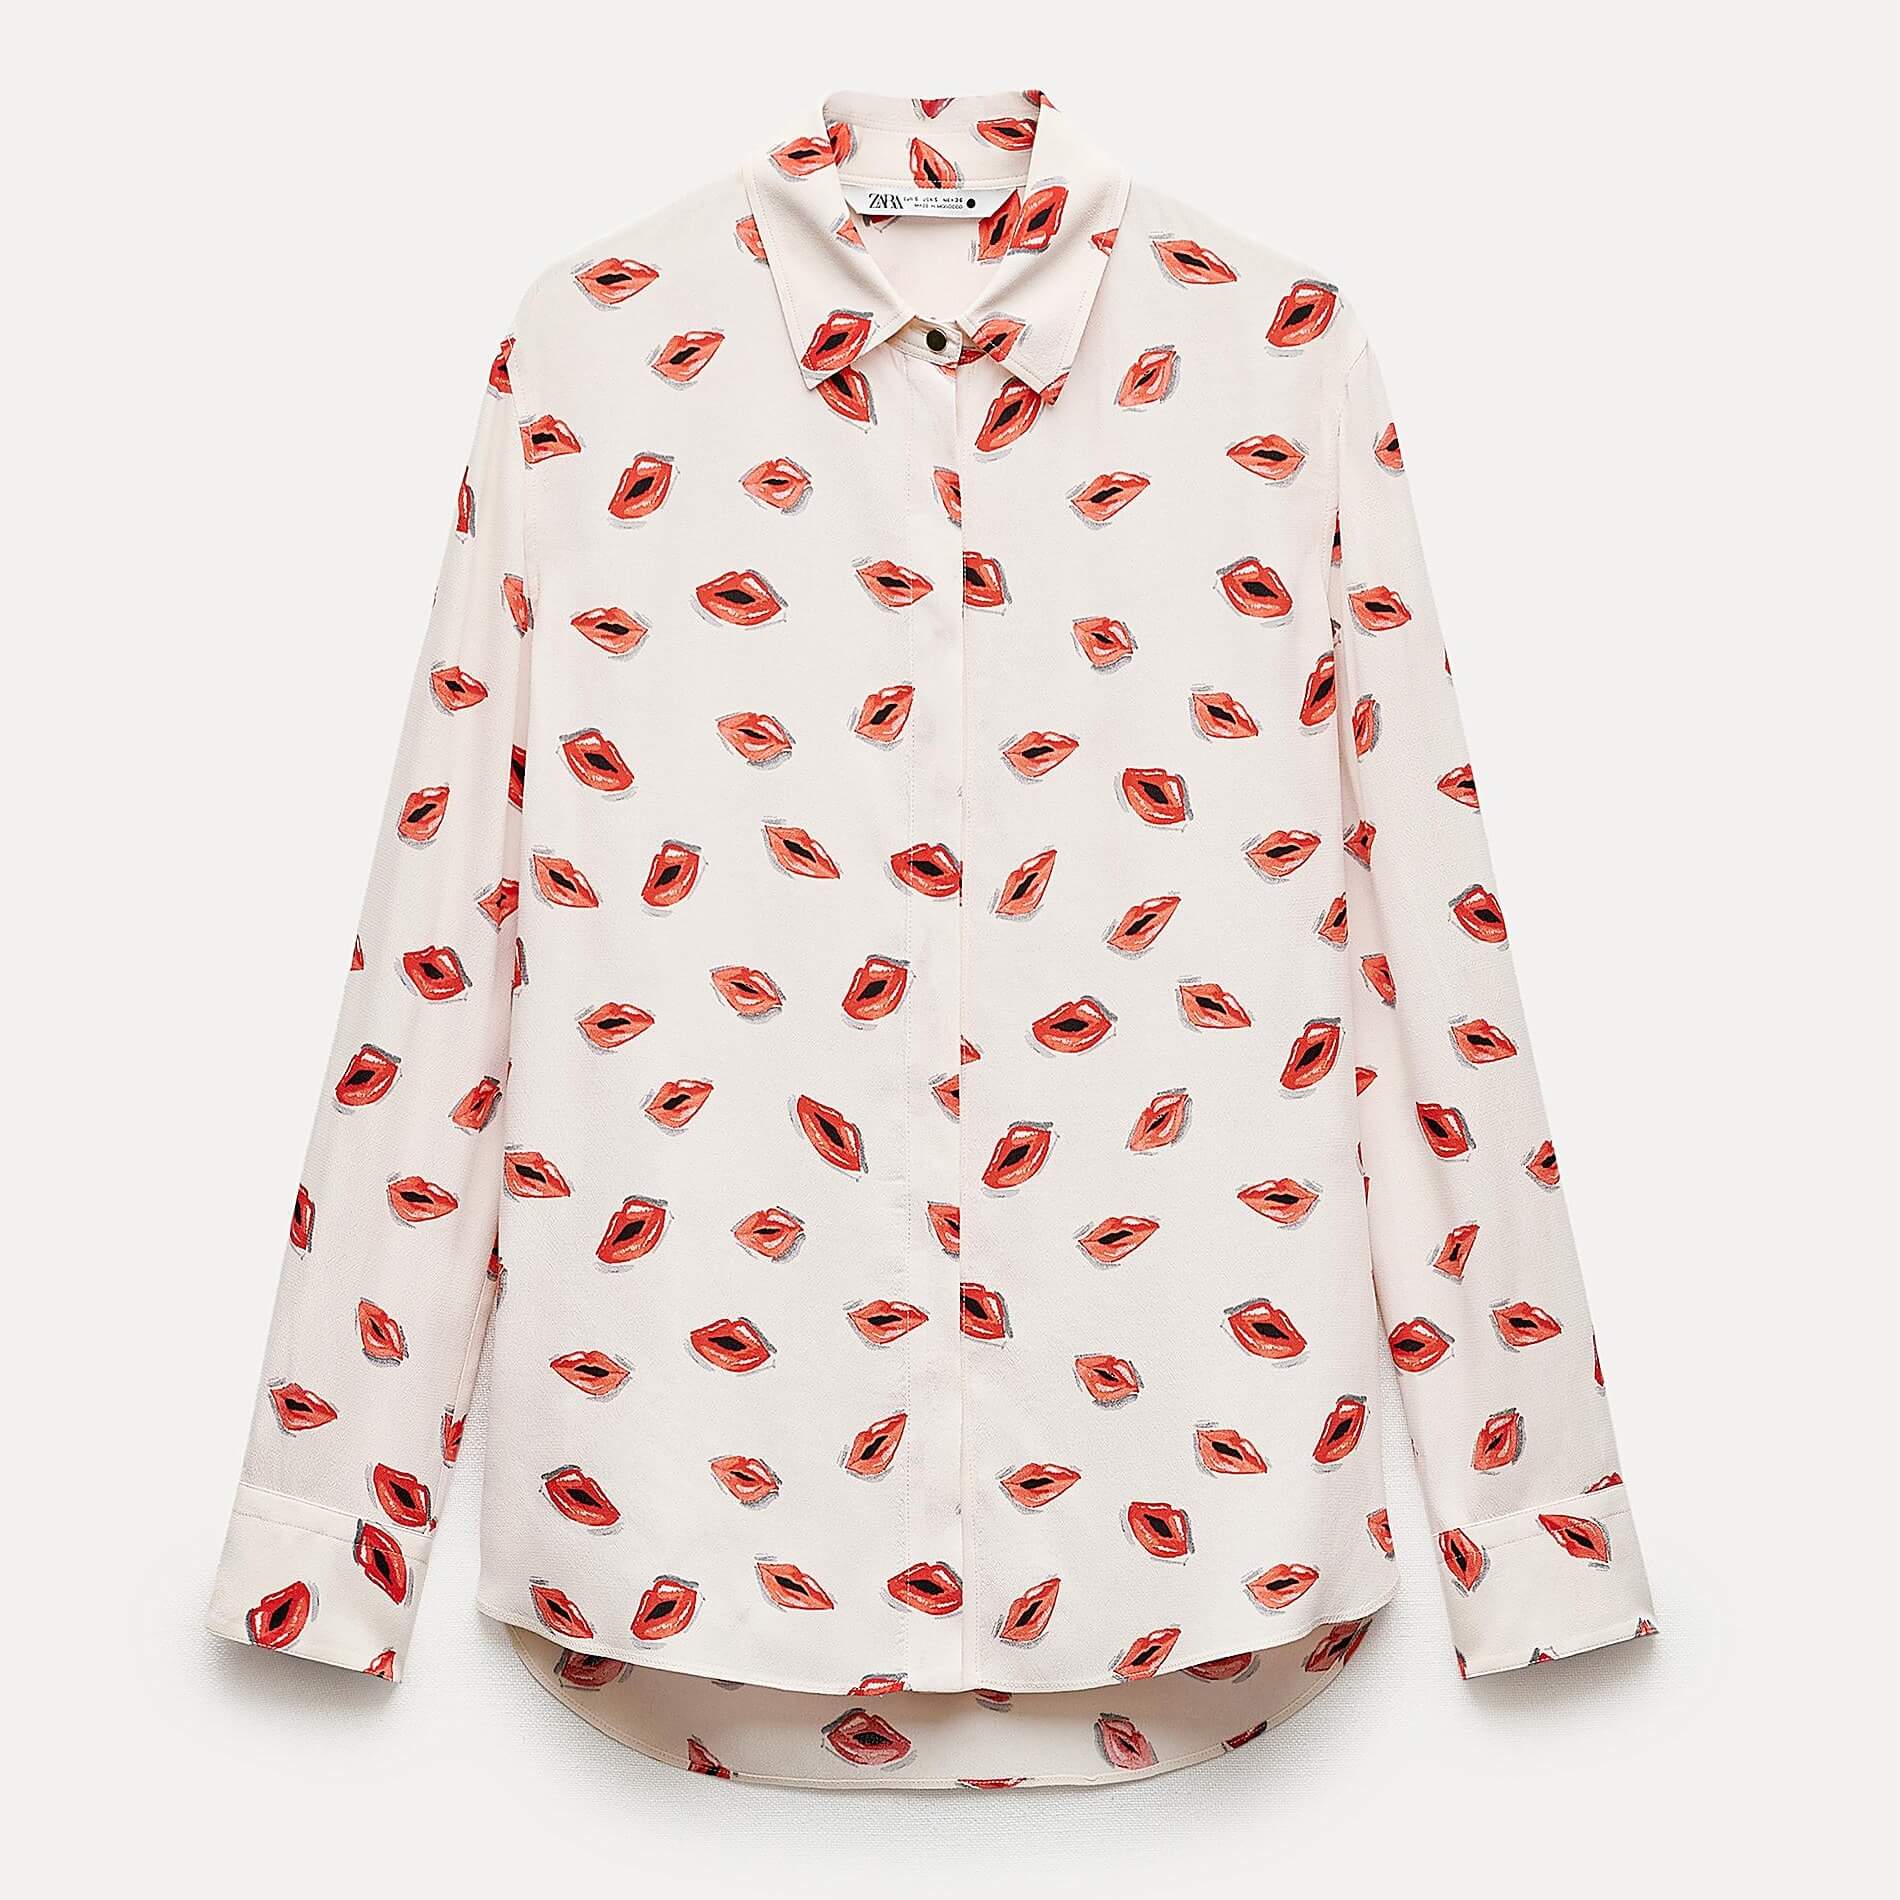 Рубашка Zara ZW Collection Printed, светло-бежевый/красный